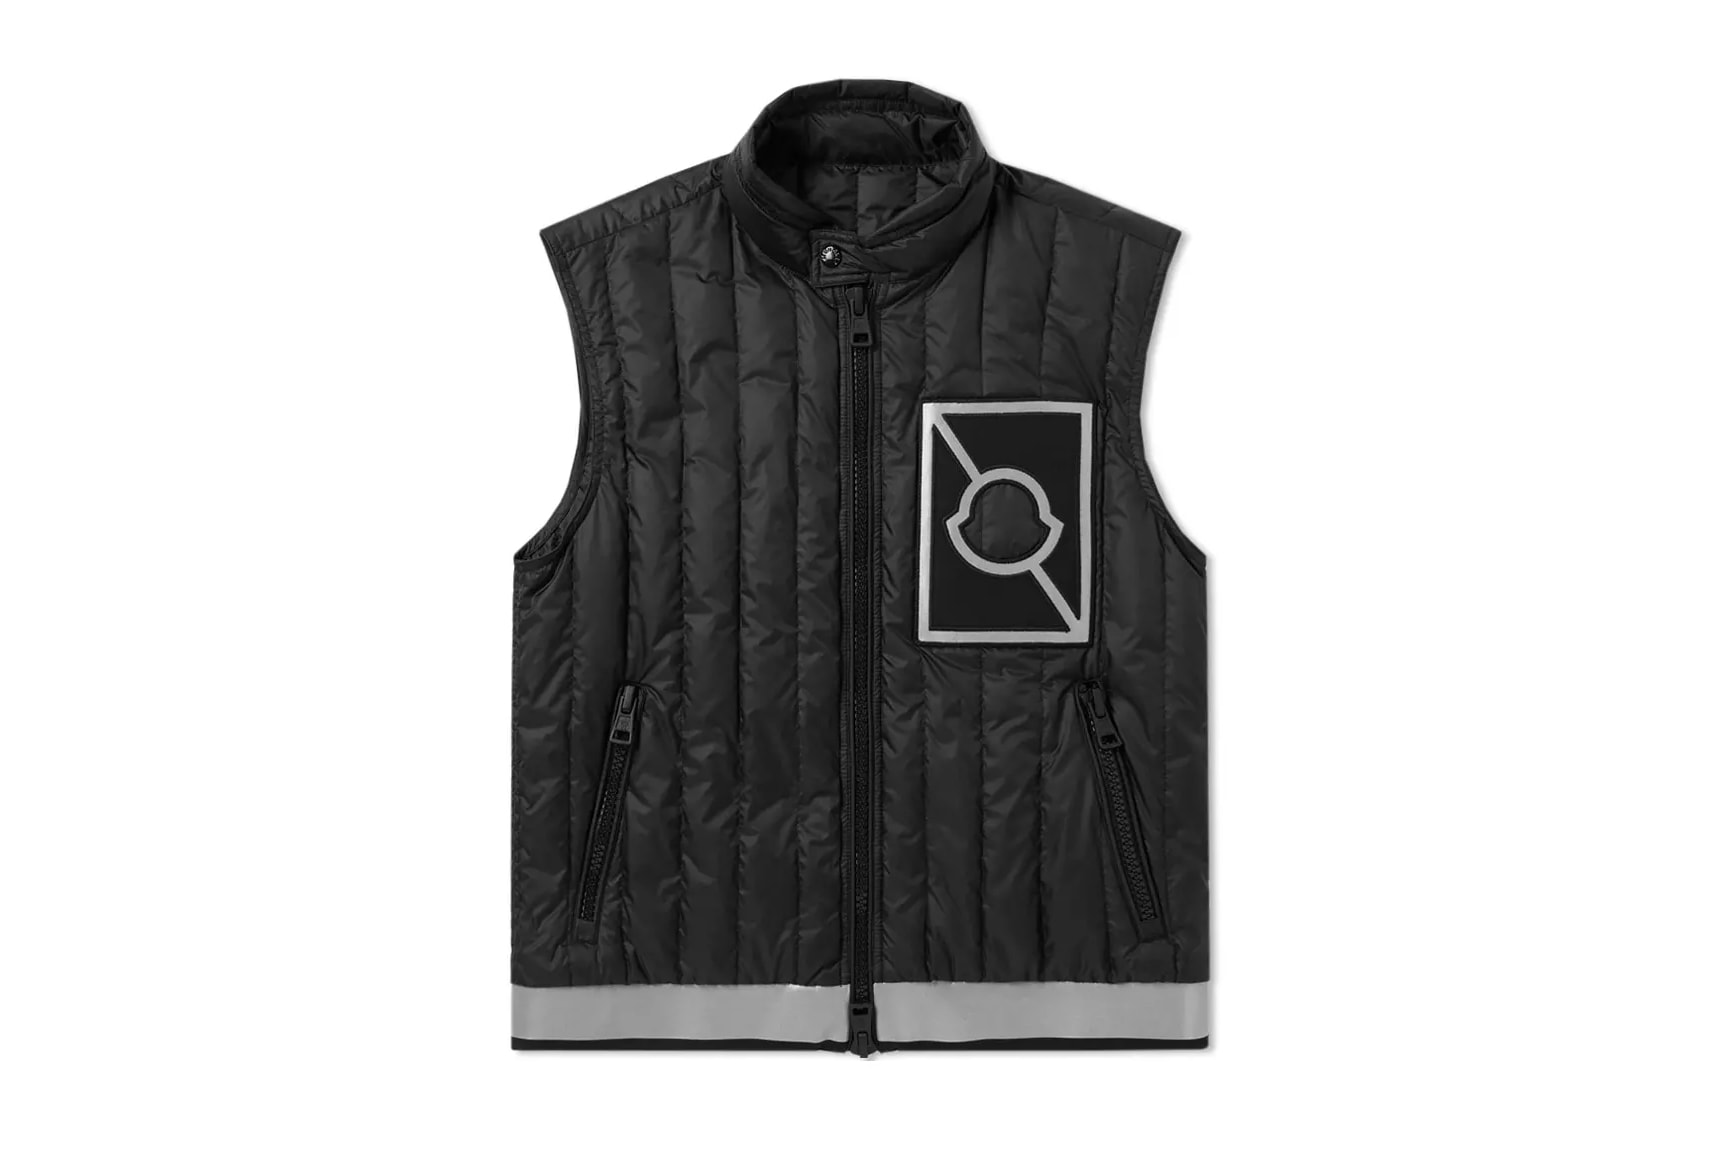 Moncler C Craig Green Spring Summer 2018 Outerwear Jacket